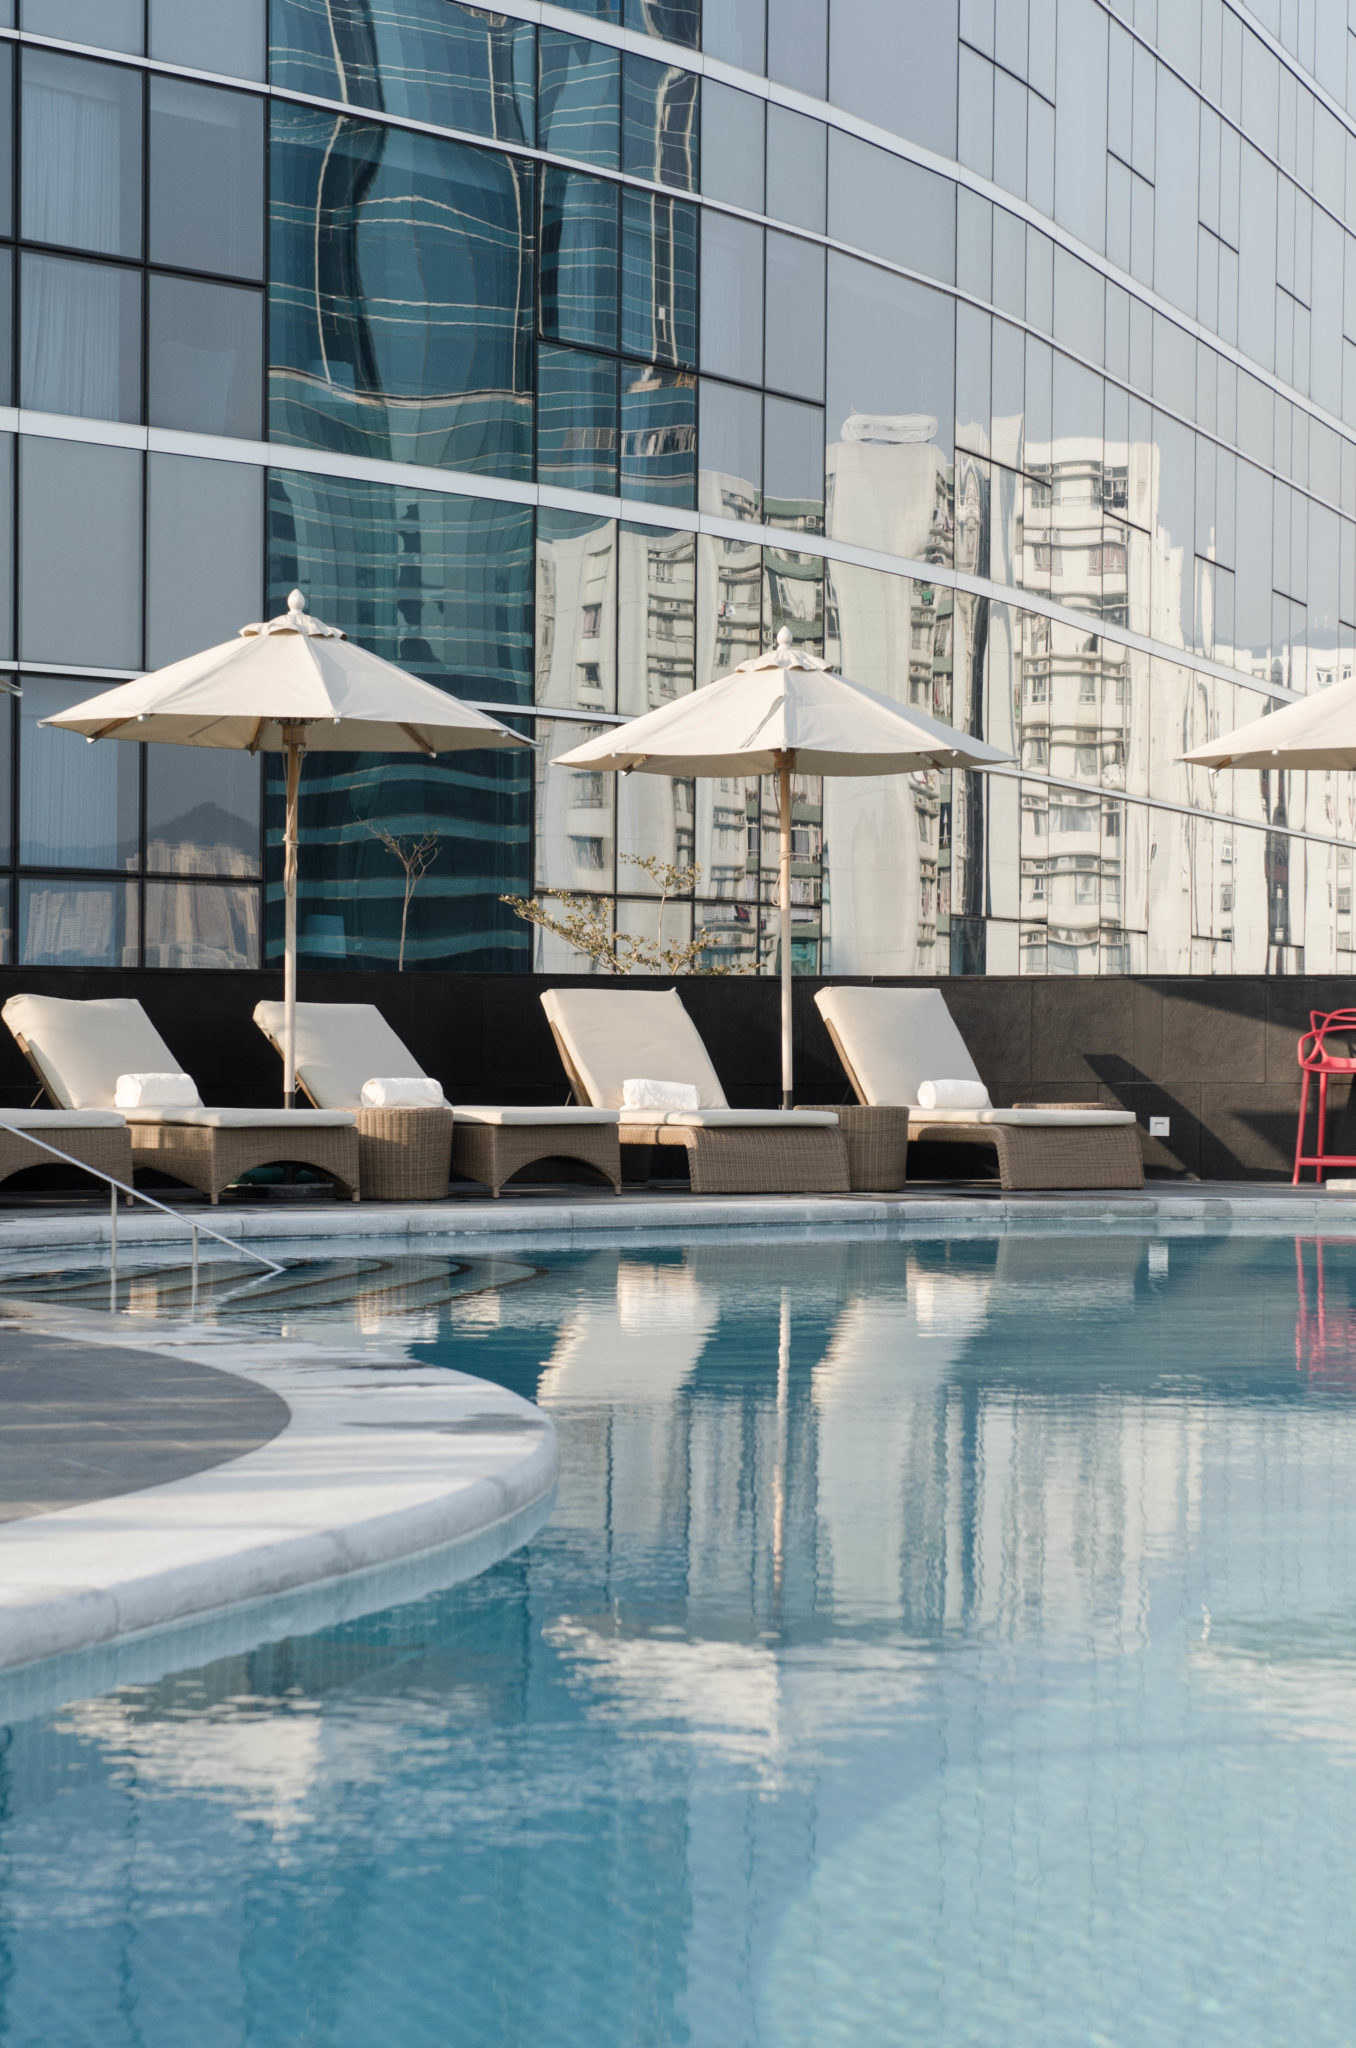 Im Pool des Kerry Hotel in Hongkong kann man sich entspannen.